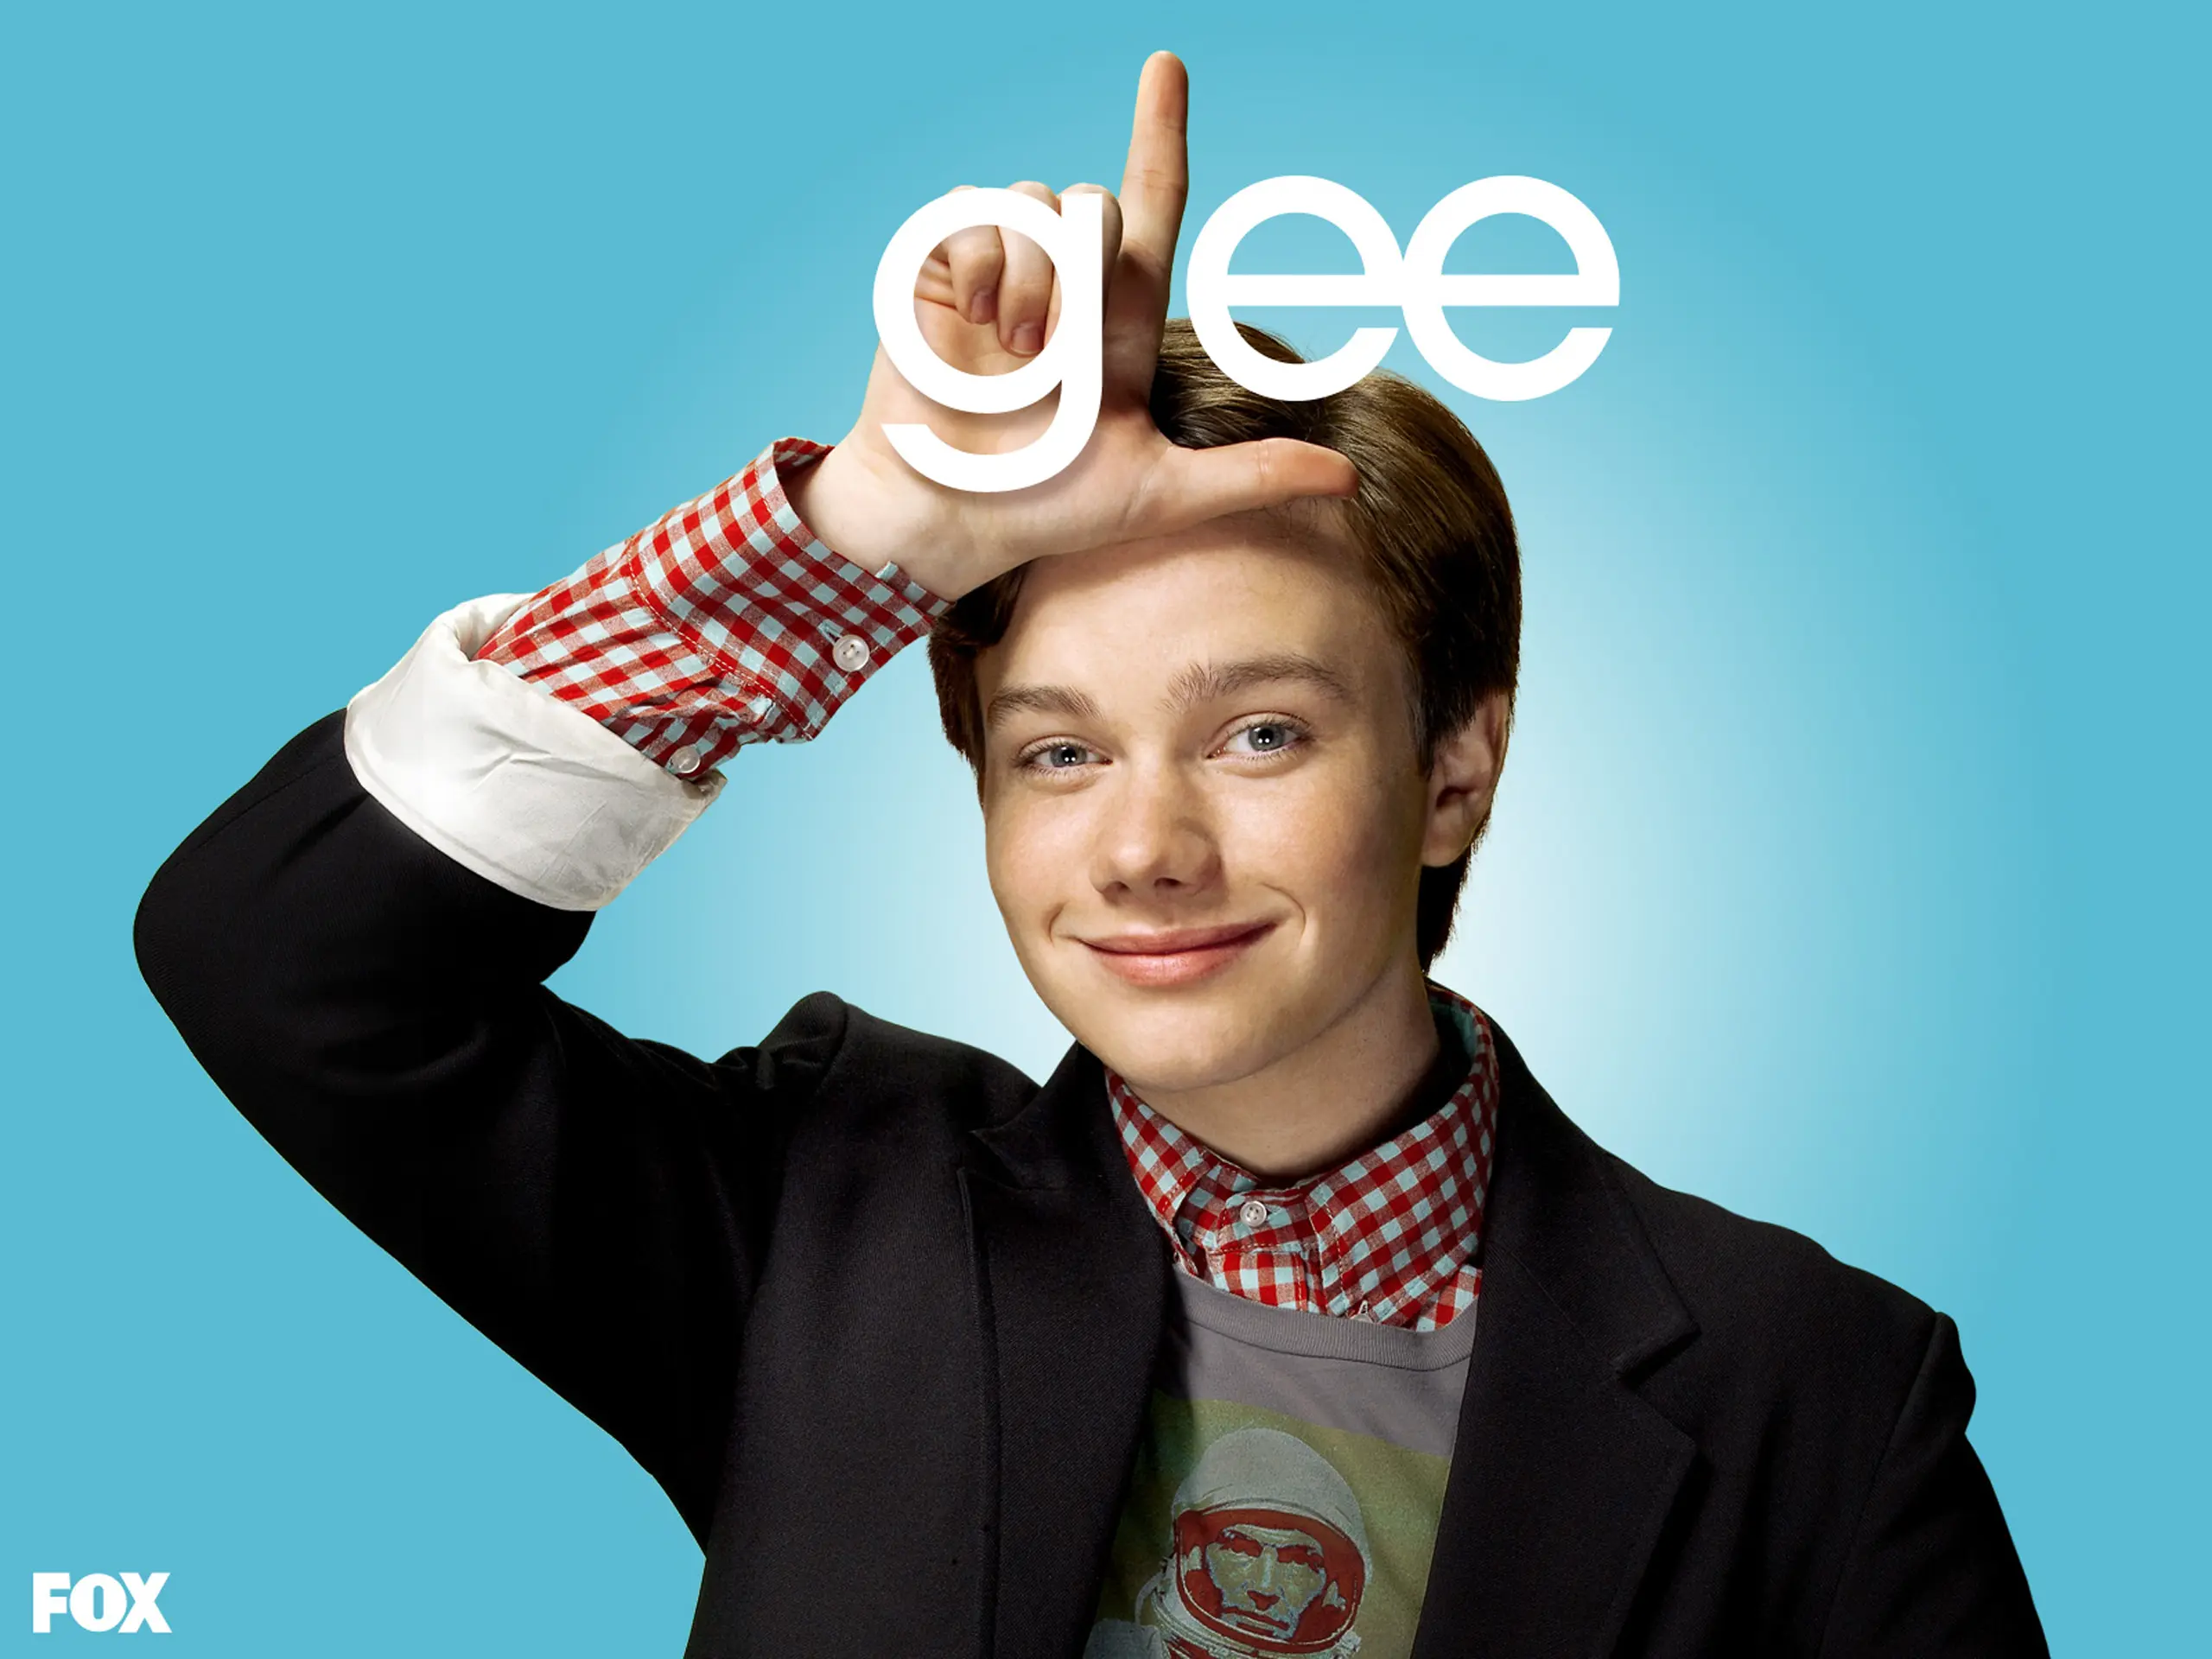 Glee wallpaper 12